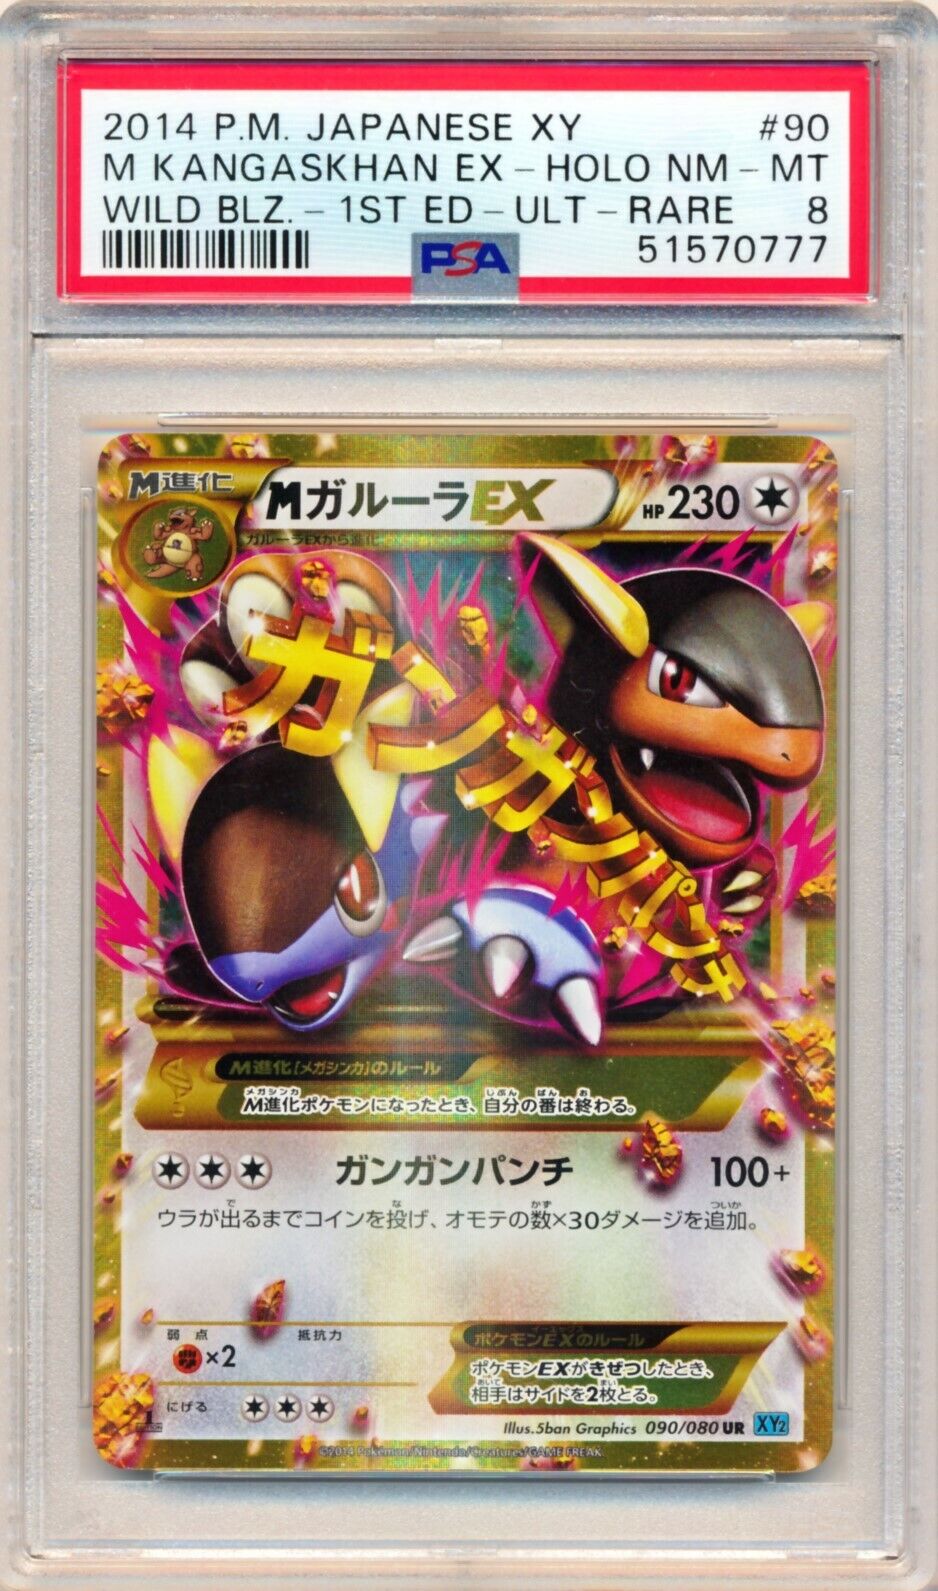 PSA 8 NM MT- M Kangaskhan EX 090/080 UR XY2 Pokemon Card Japanese